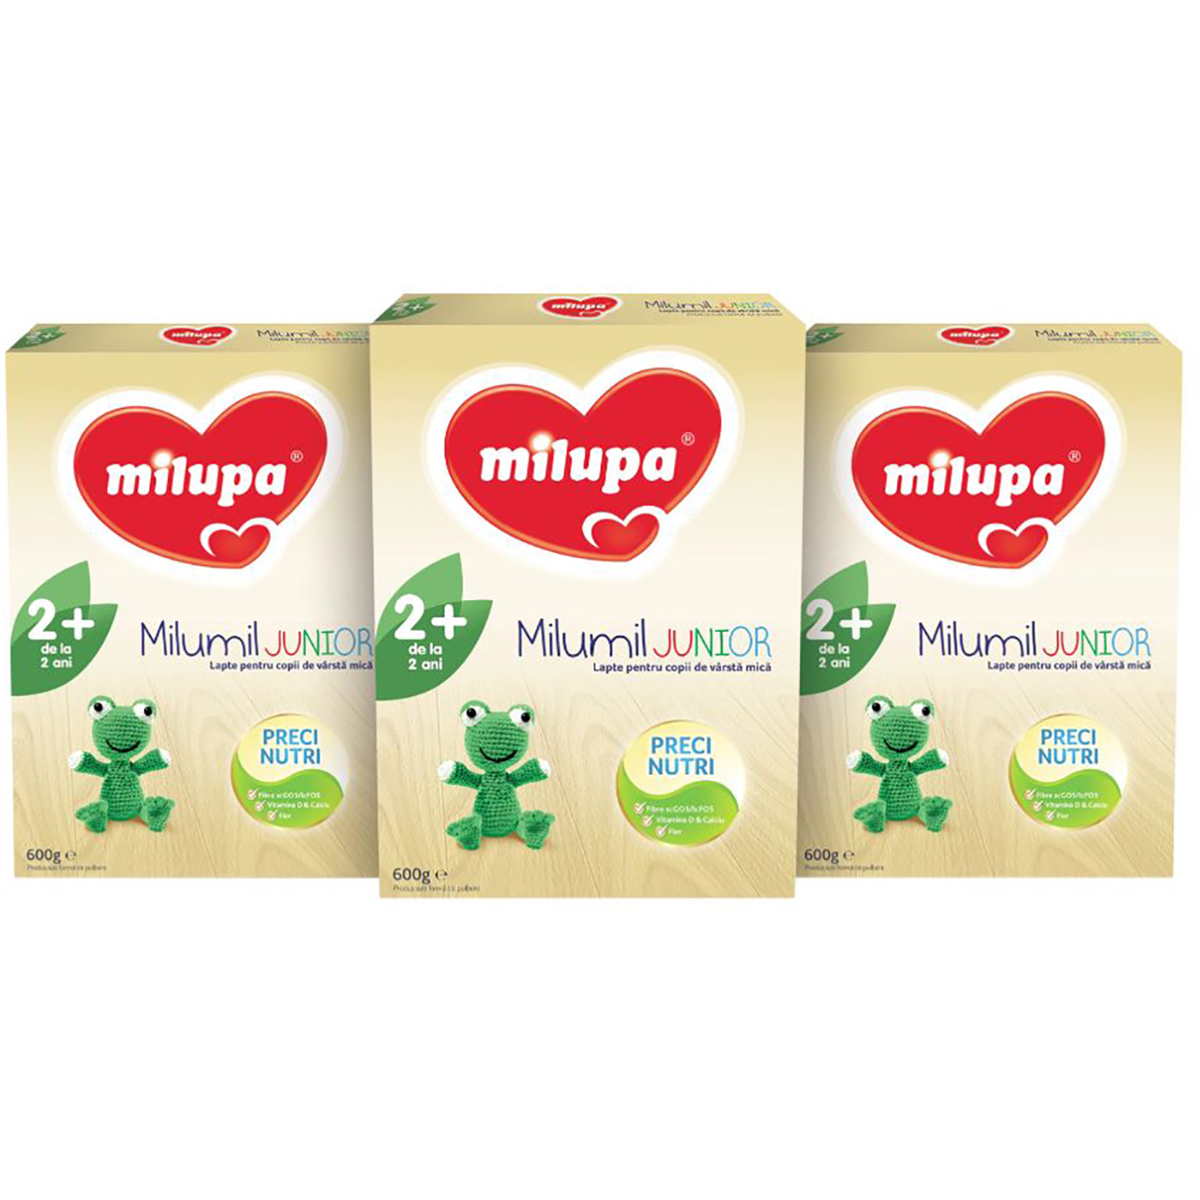 Lapte praf Milupa Milumil Junior 2+, 3 pachete x 600 g imagine